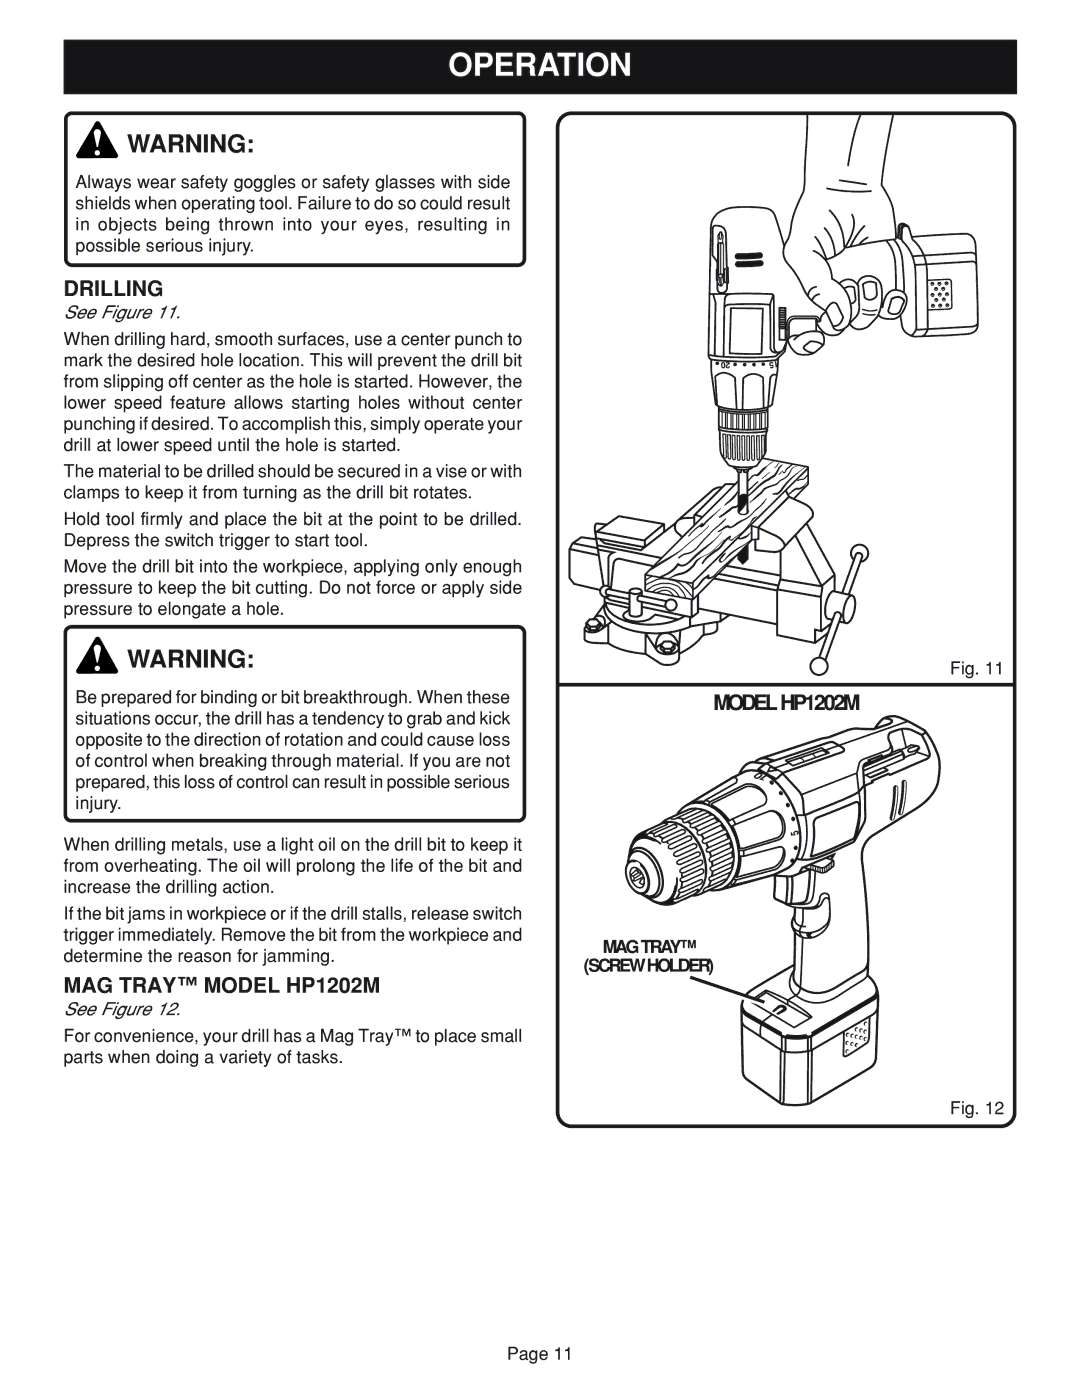 Ryobi HP962 manual Drilling, MAG Tray Model HP1202M, MAG Tray Screw Holder 